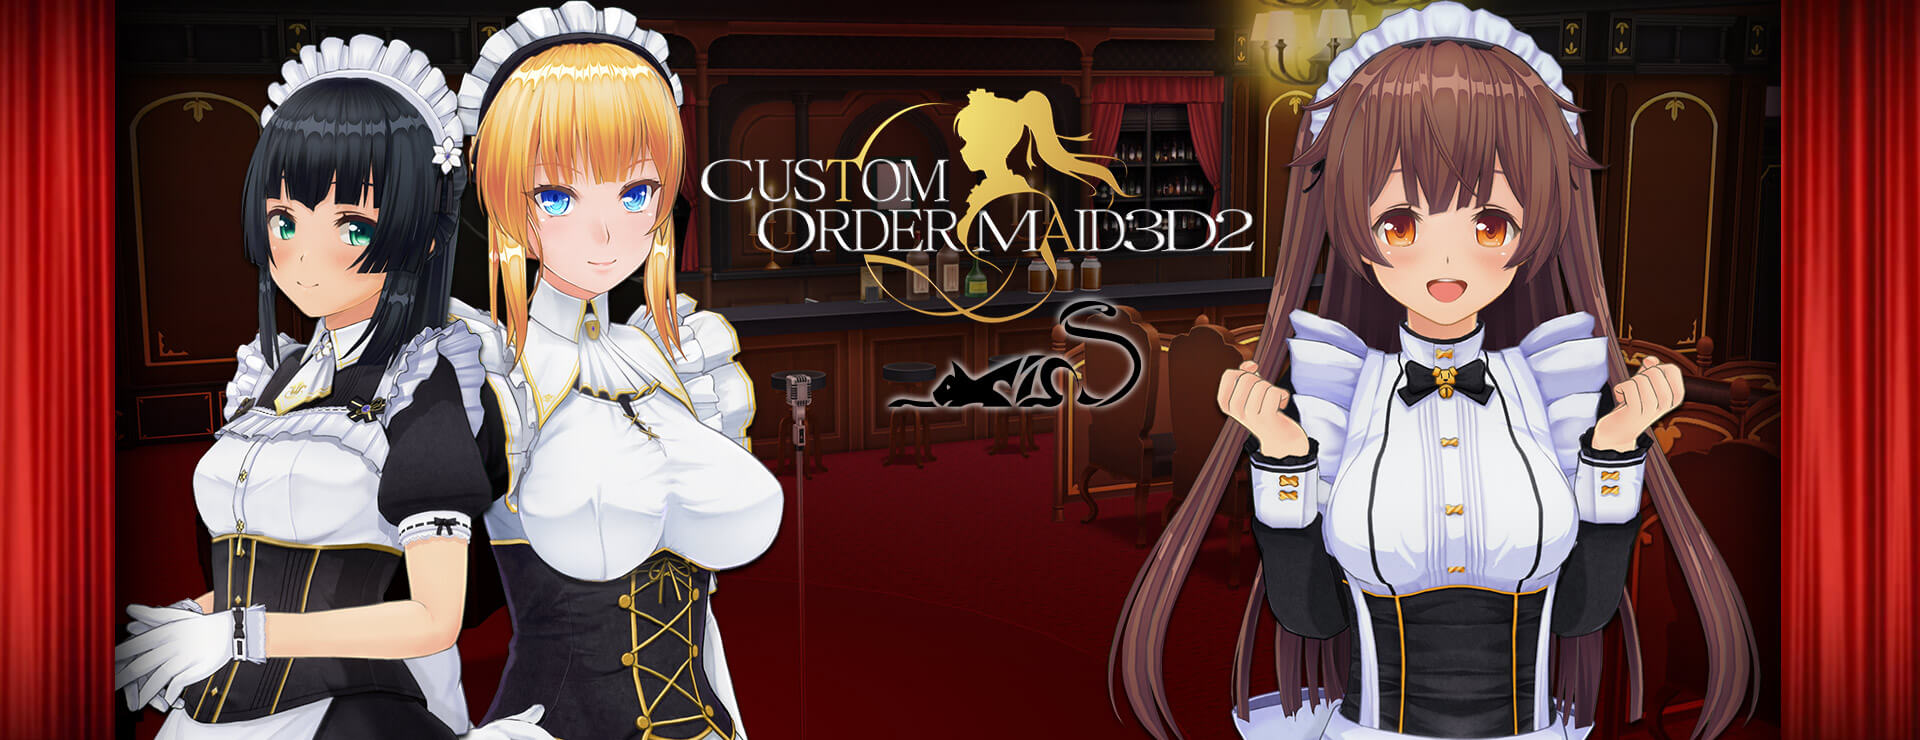 Custom Order Maid 3D2 Game - Simulation 遊戲